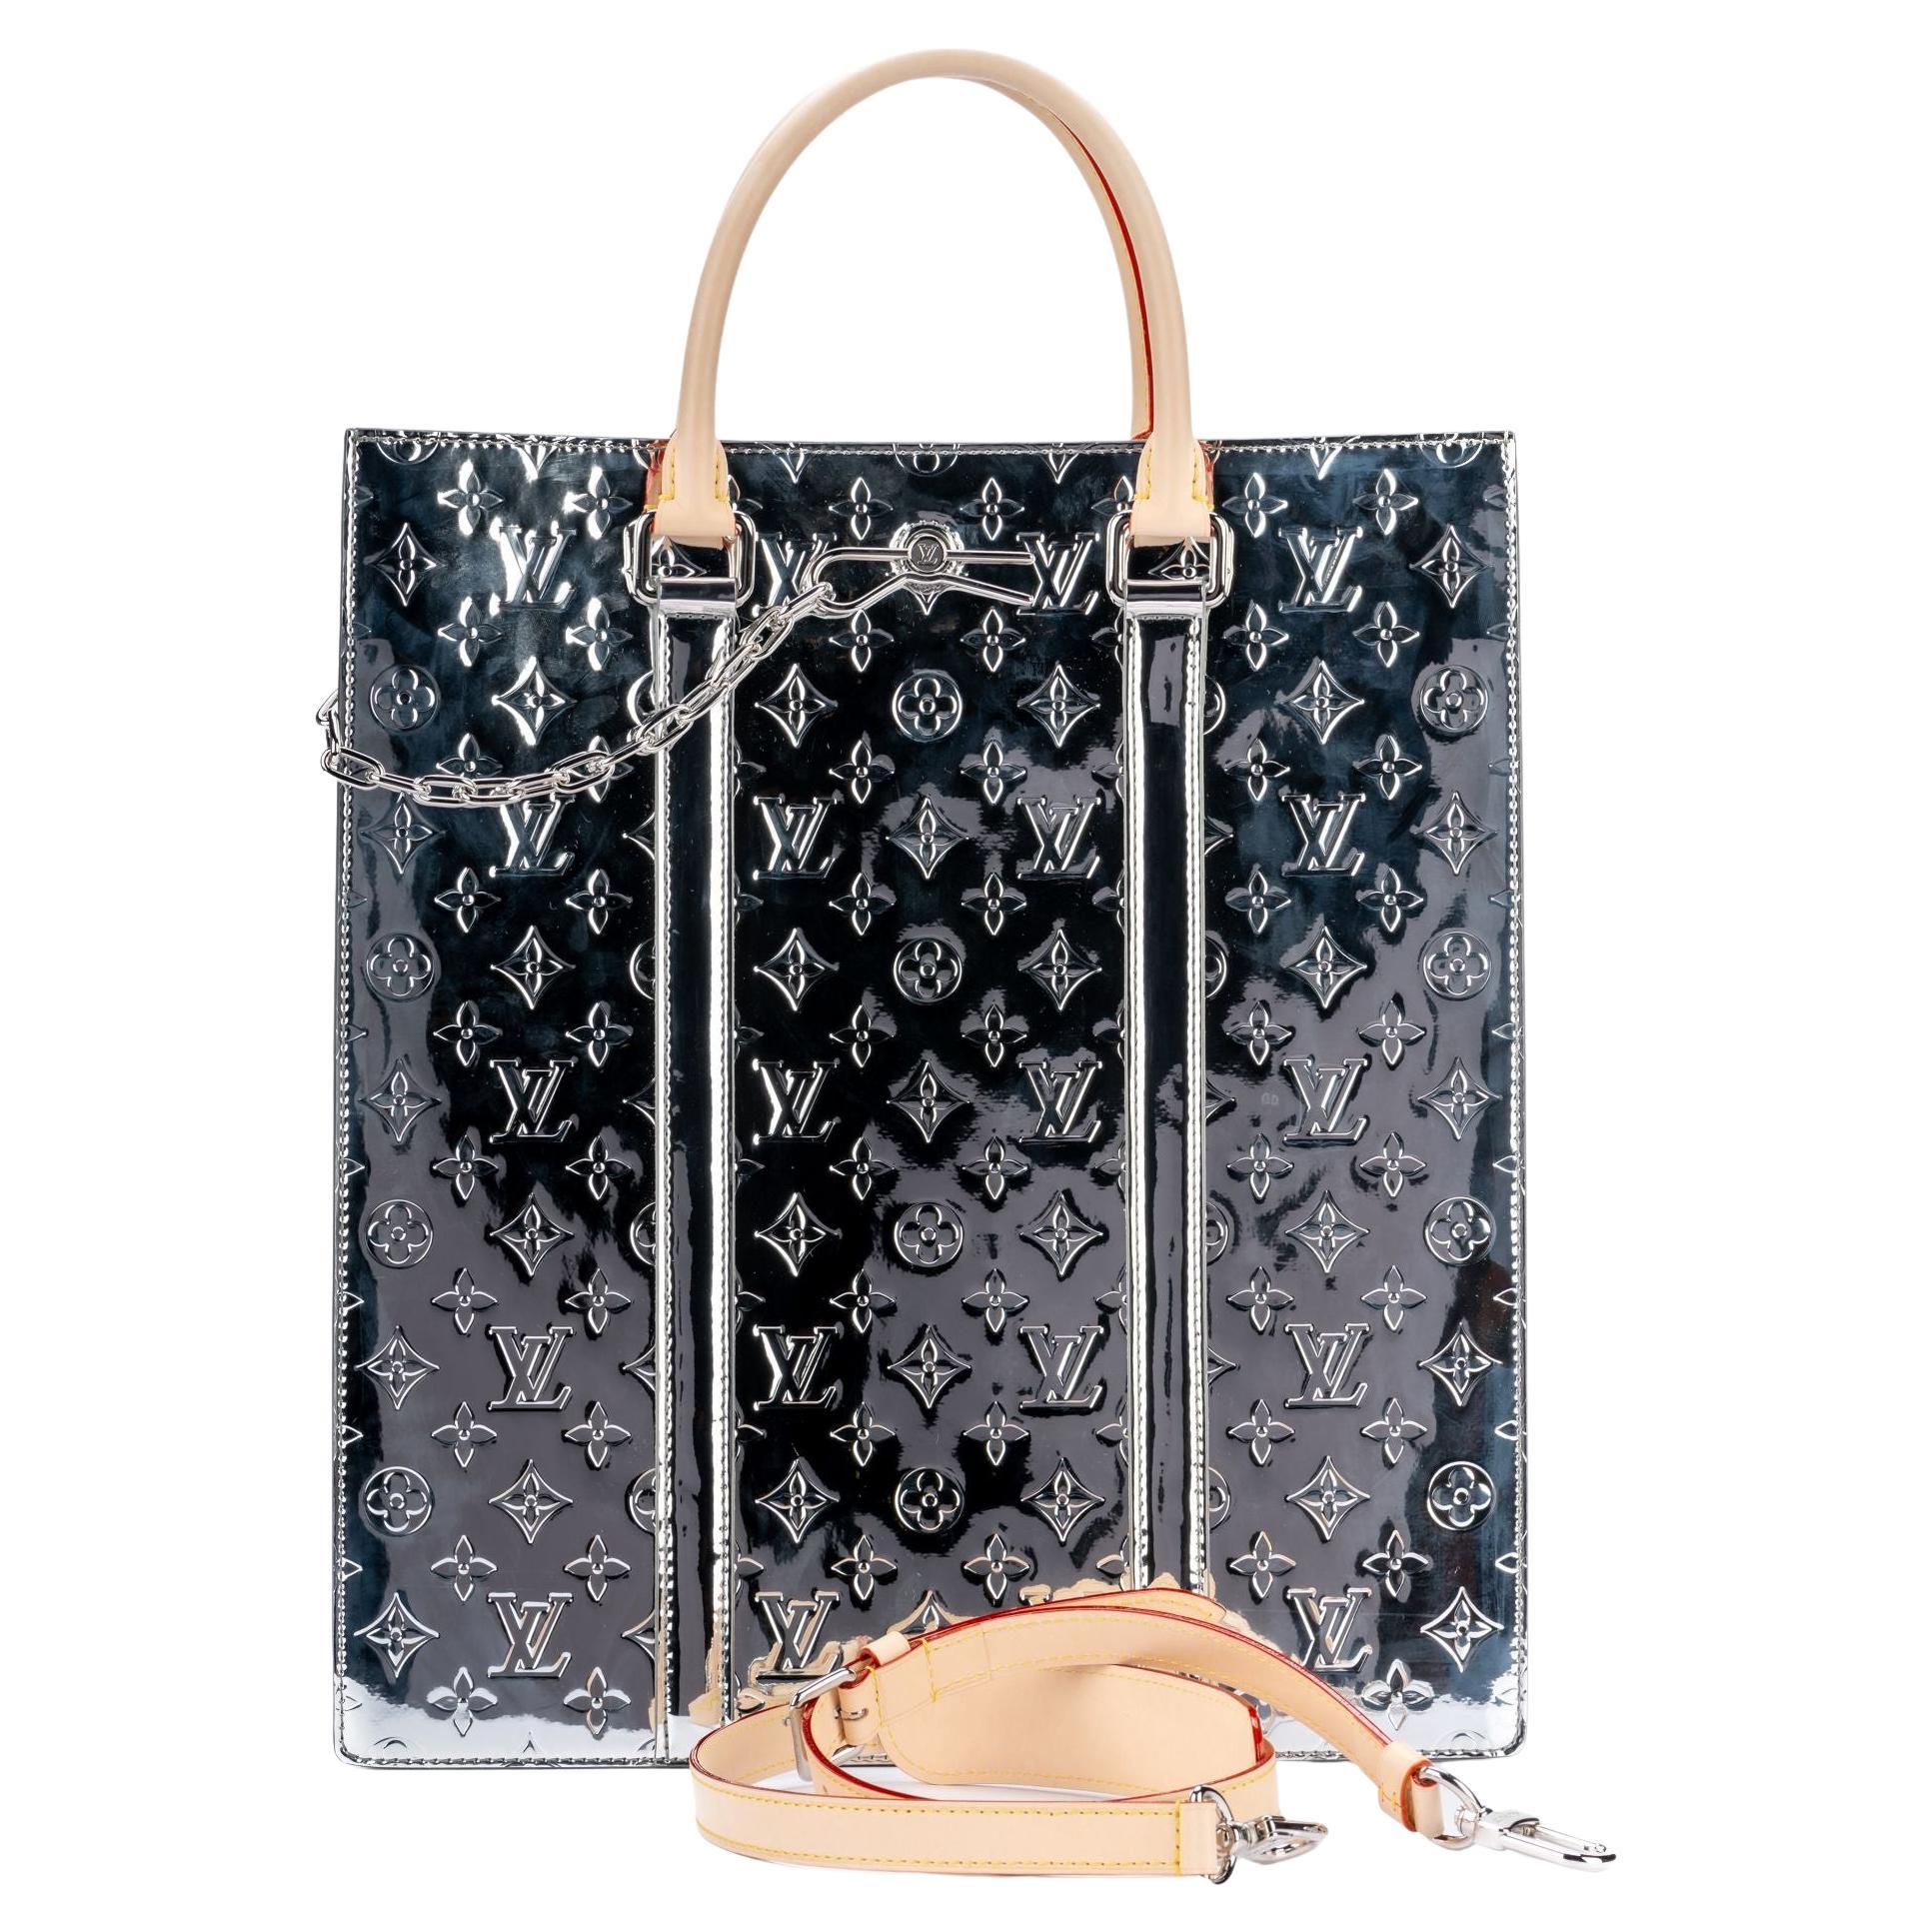 What is a mirror Louis Vuitton bag?